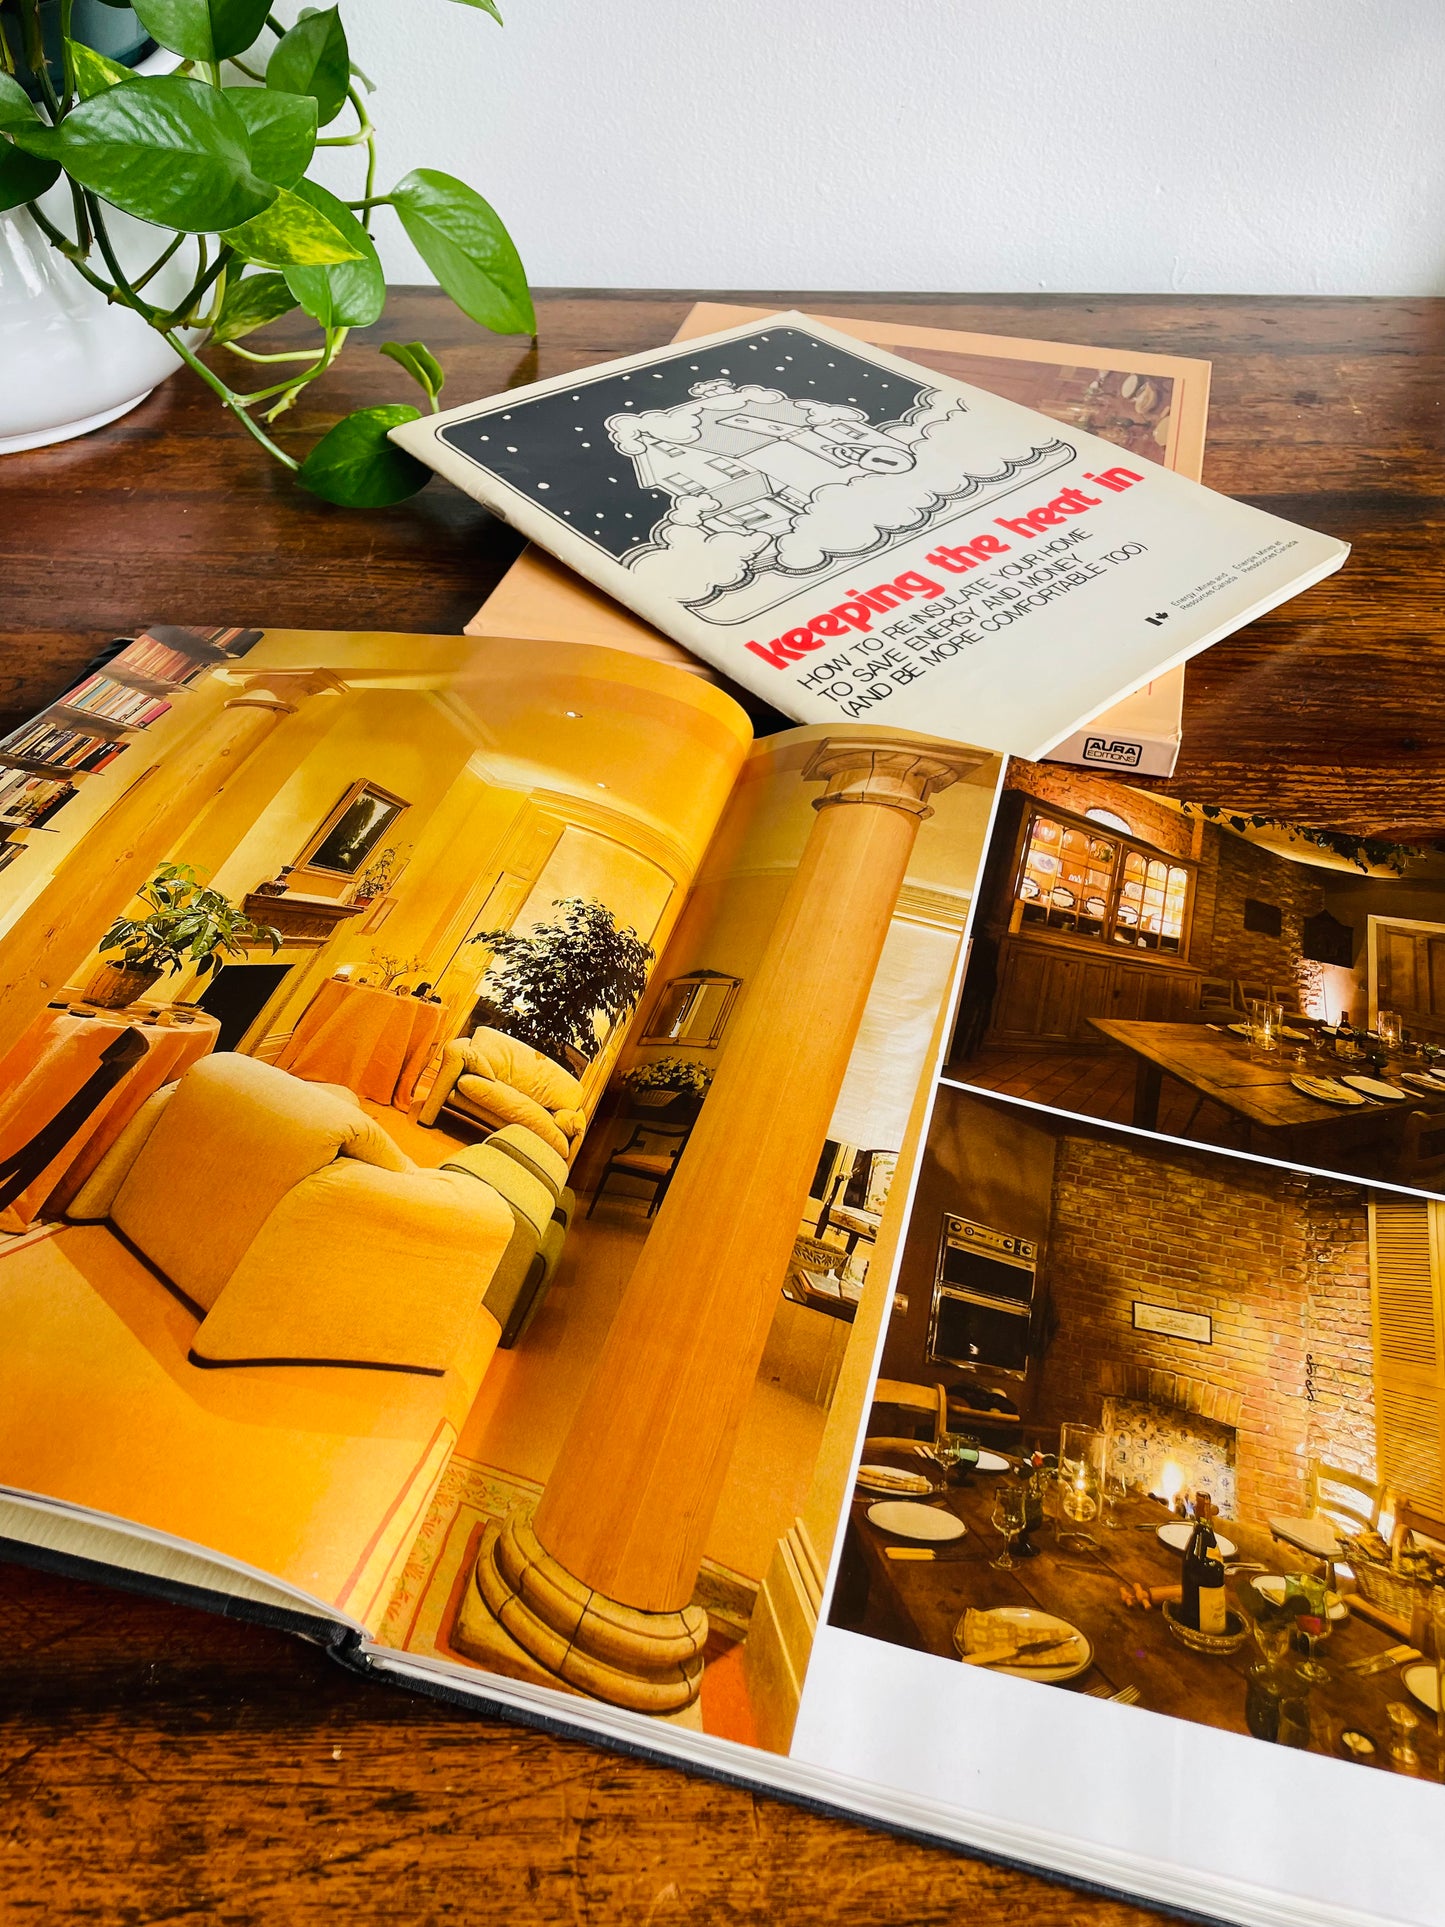 Lighting & Energy Vintage Book Bundle - Home Lighting Ideas, Energy Guide